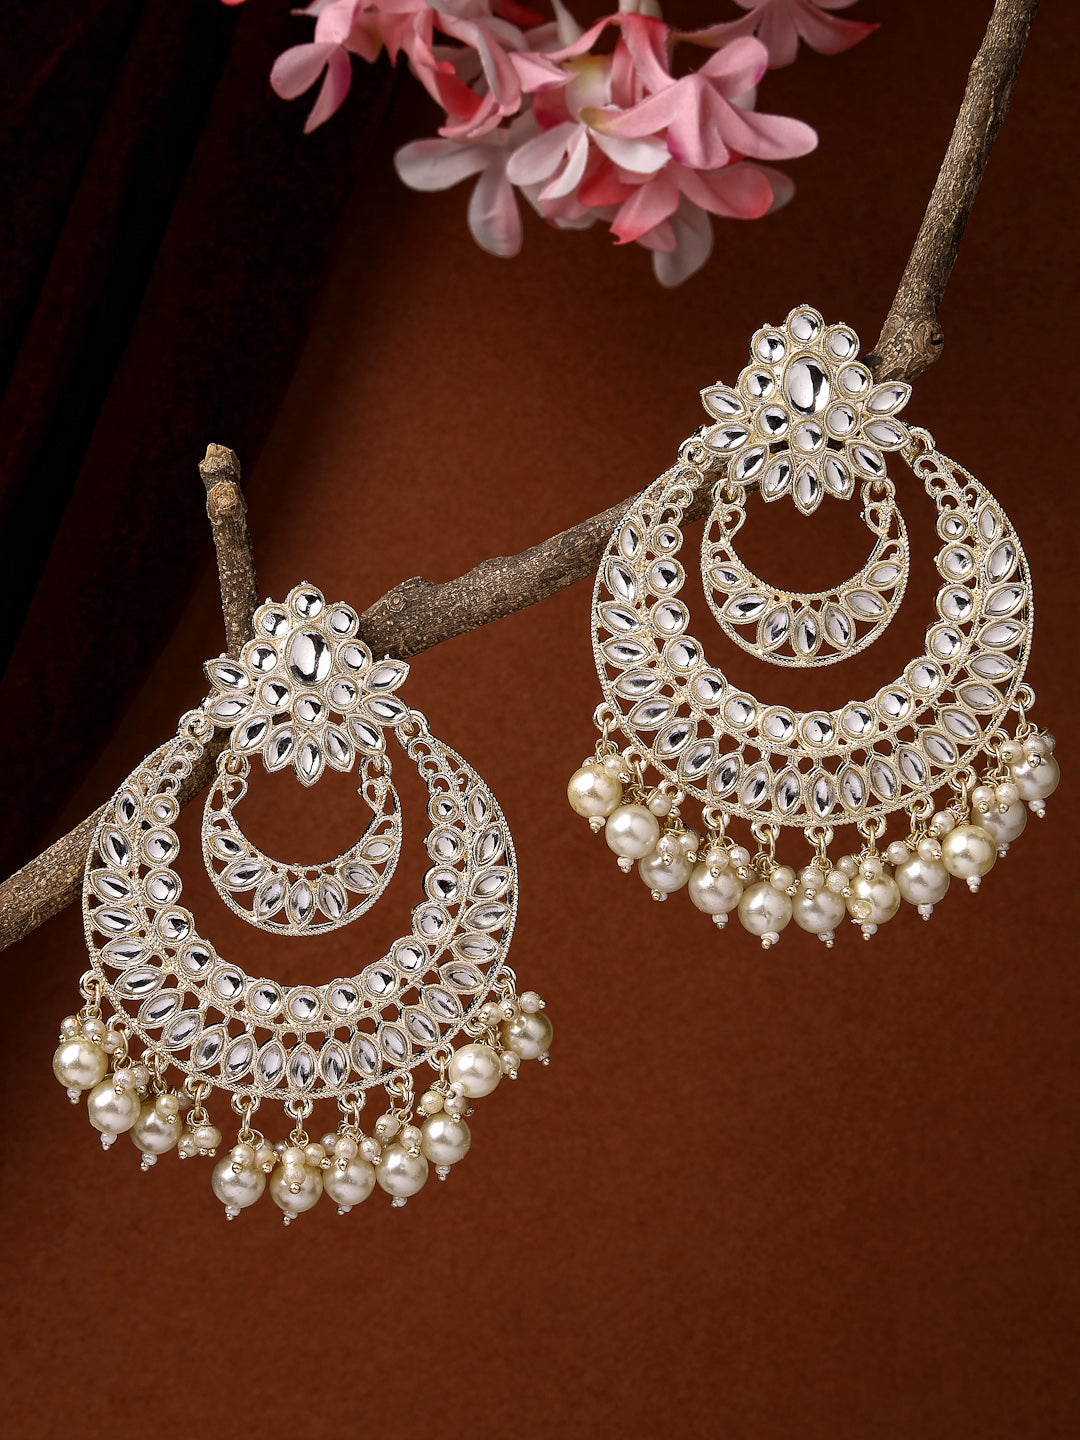 Women's Gold-Plated Kundan Handcrafted Chandbalis Earrings - NVR